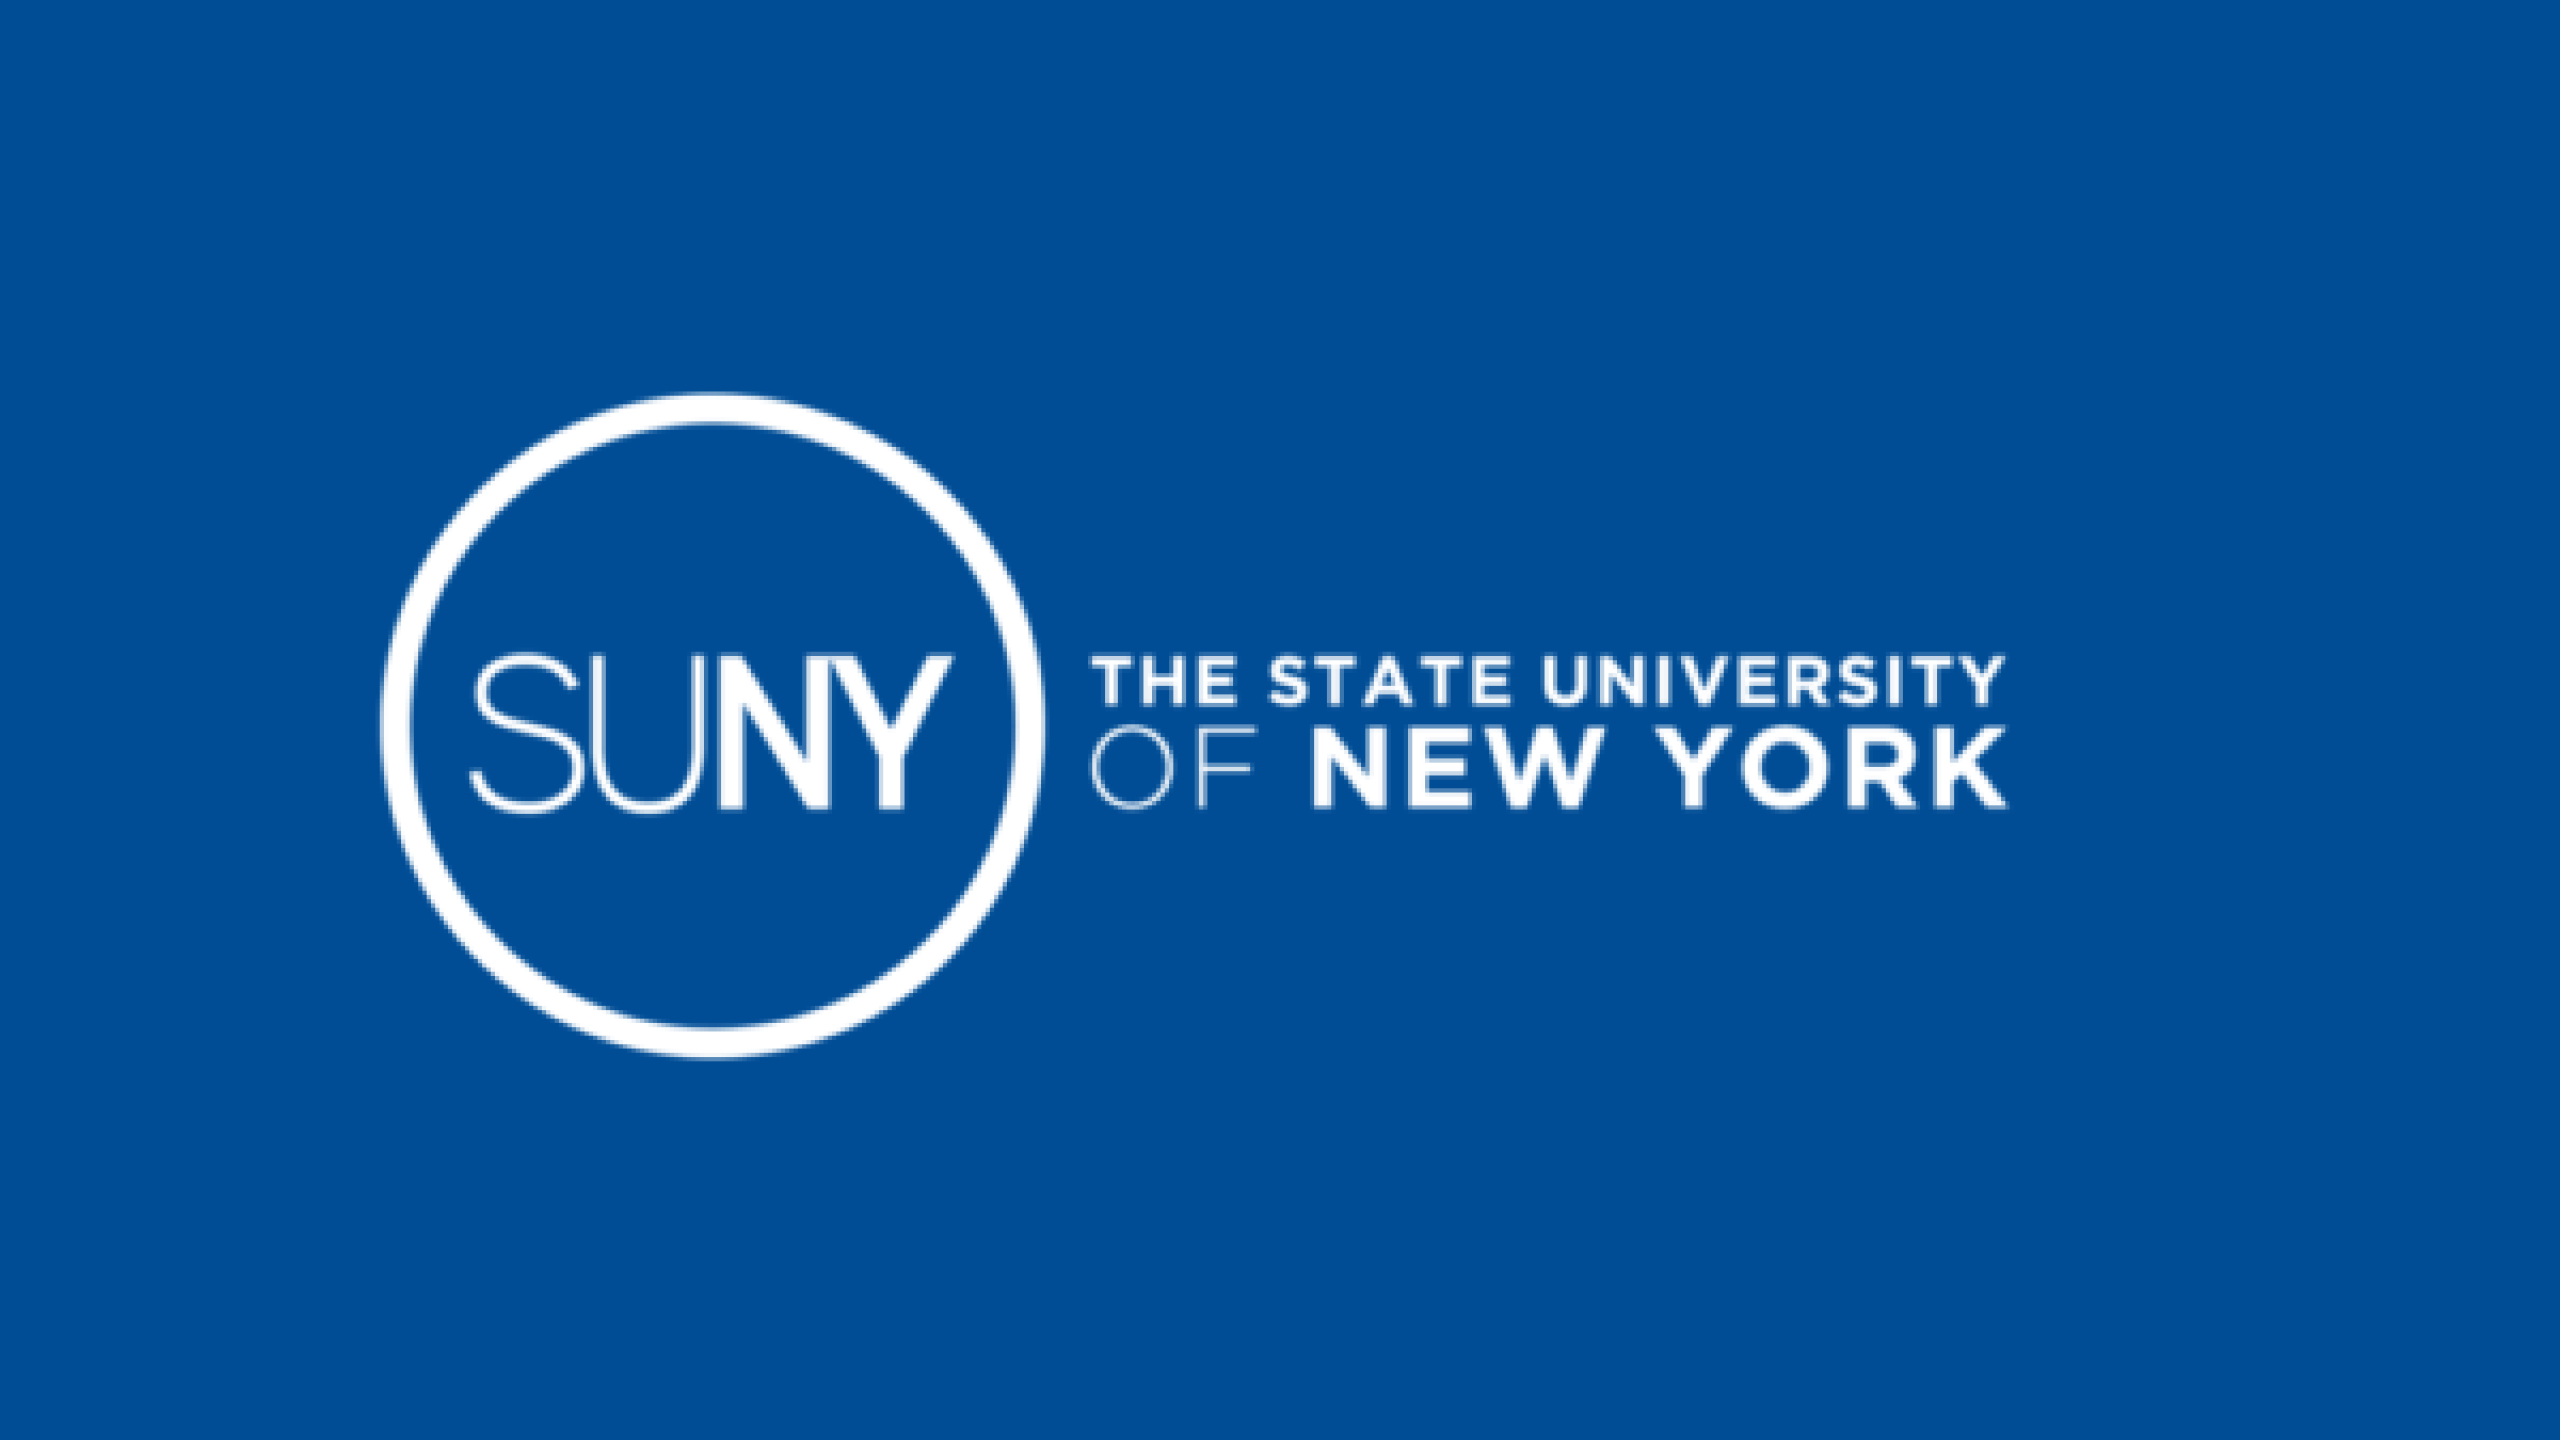 SUNY logo